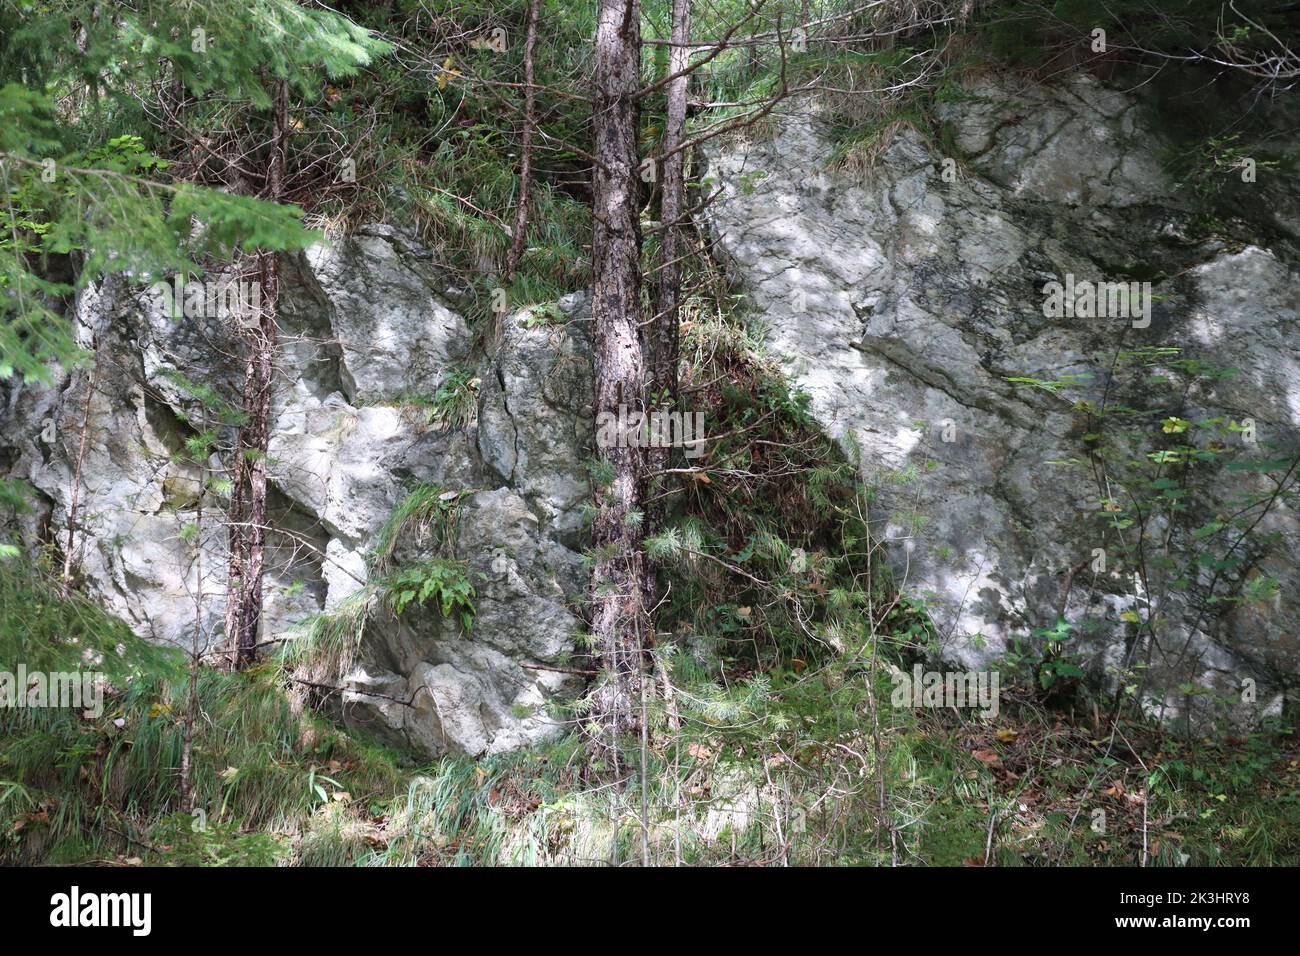 huge Rock face hidden in the Undergrowth Stock Photo